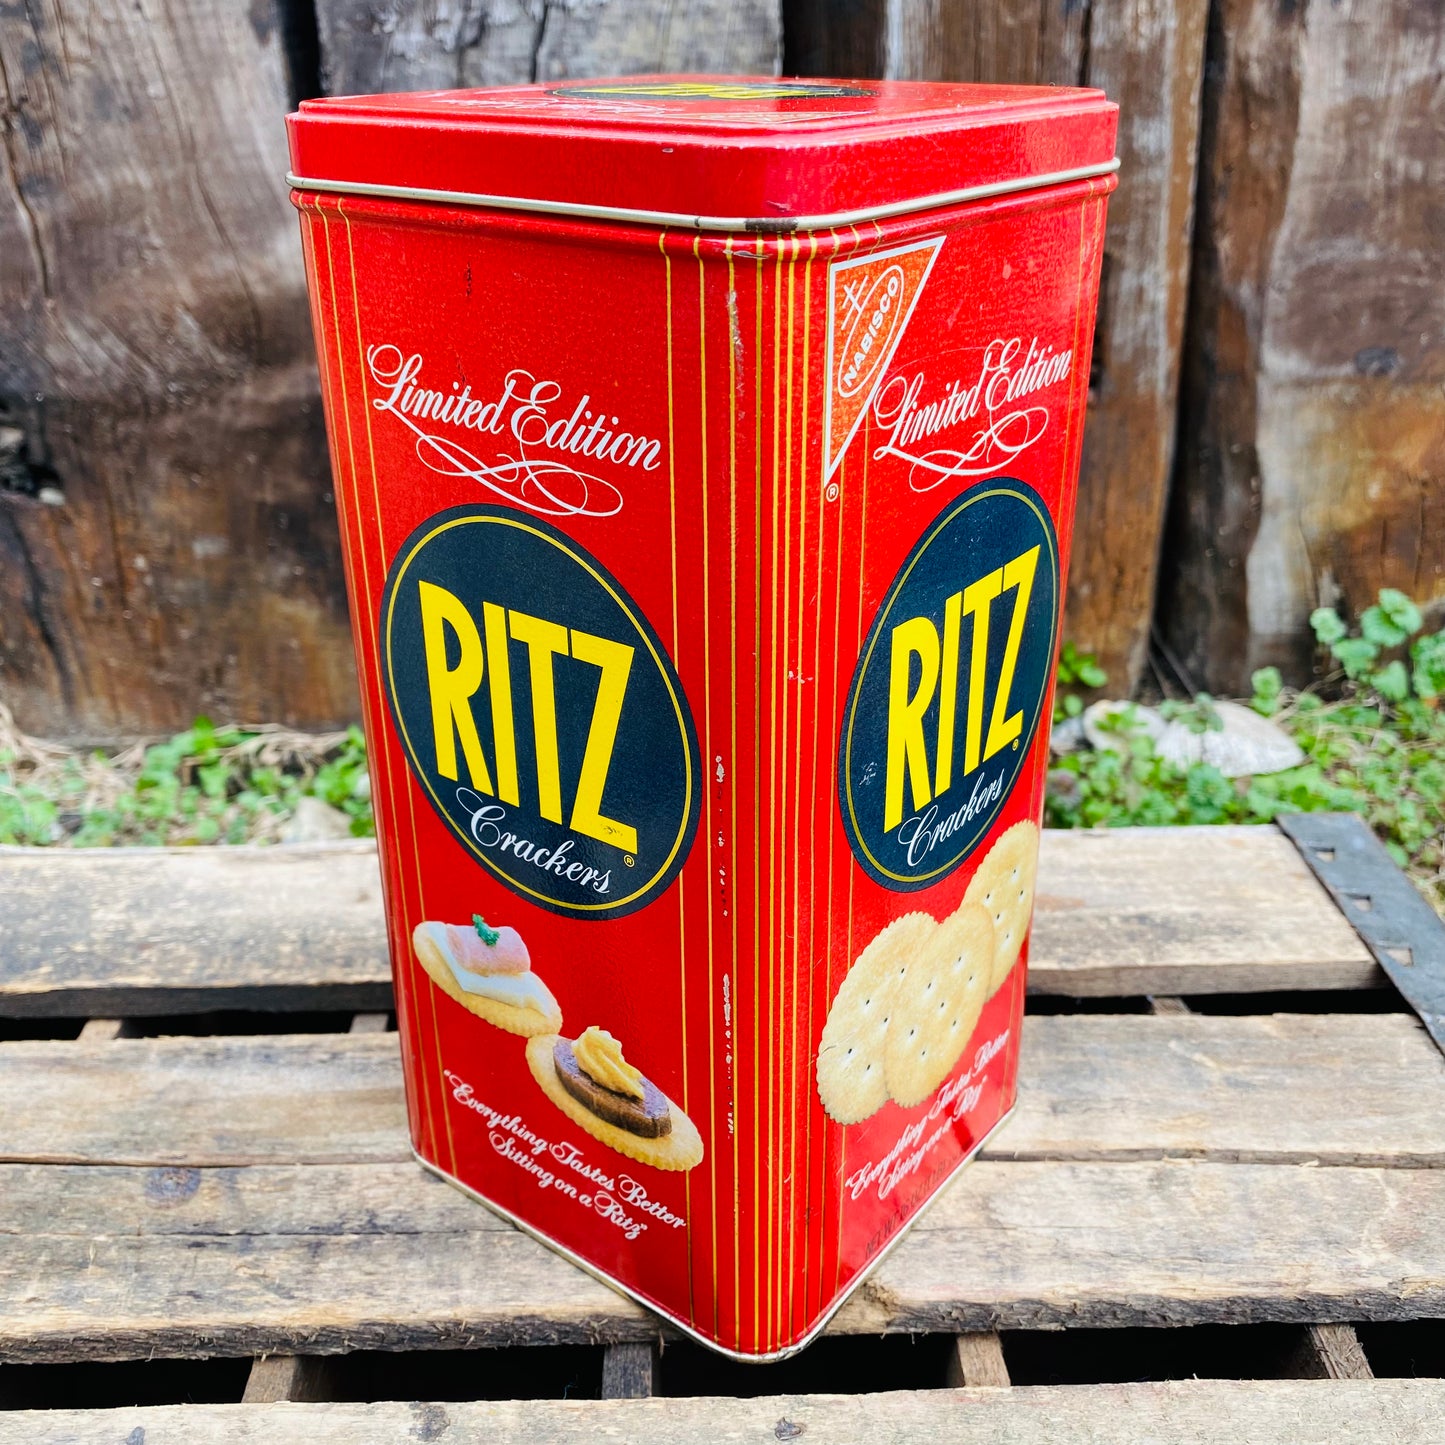 【1986 USA vintage】 RITZ リッツ TIN缶 レトロ缶